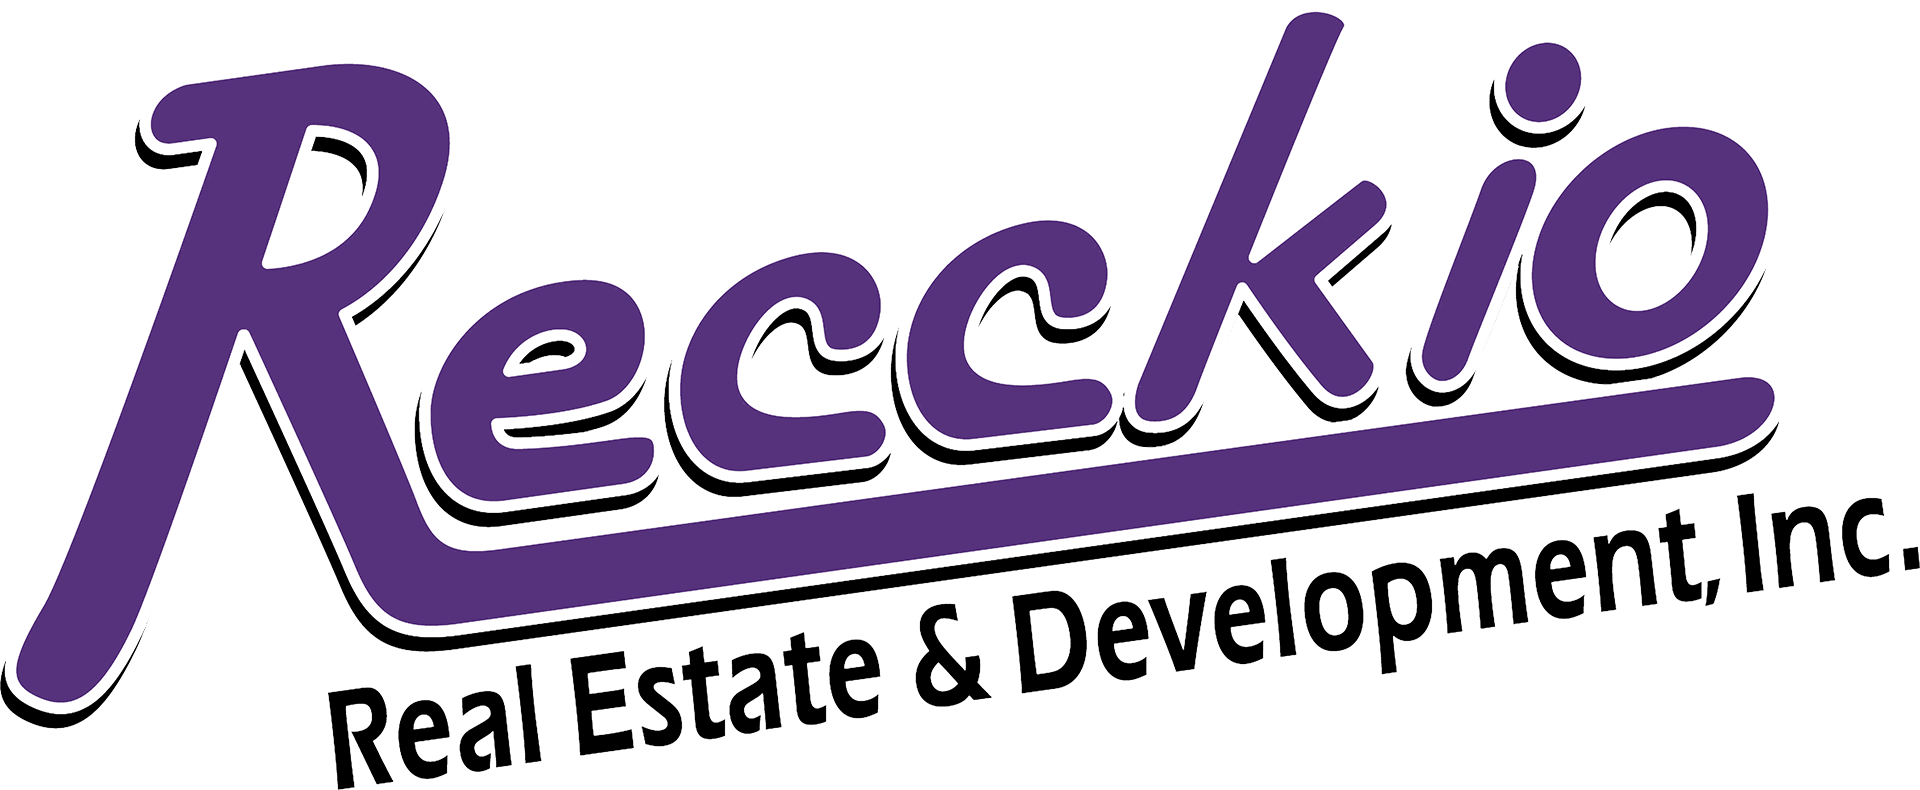 Recckio-logo-new